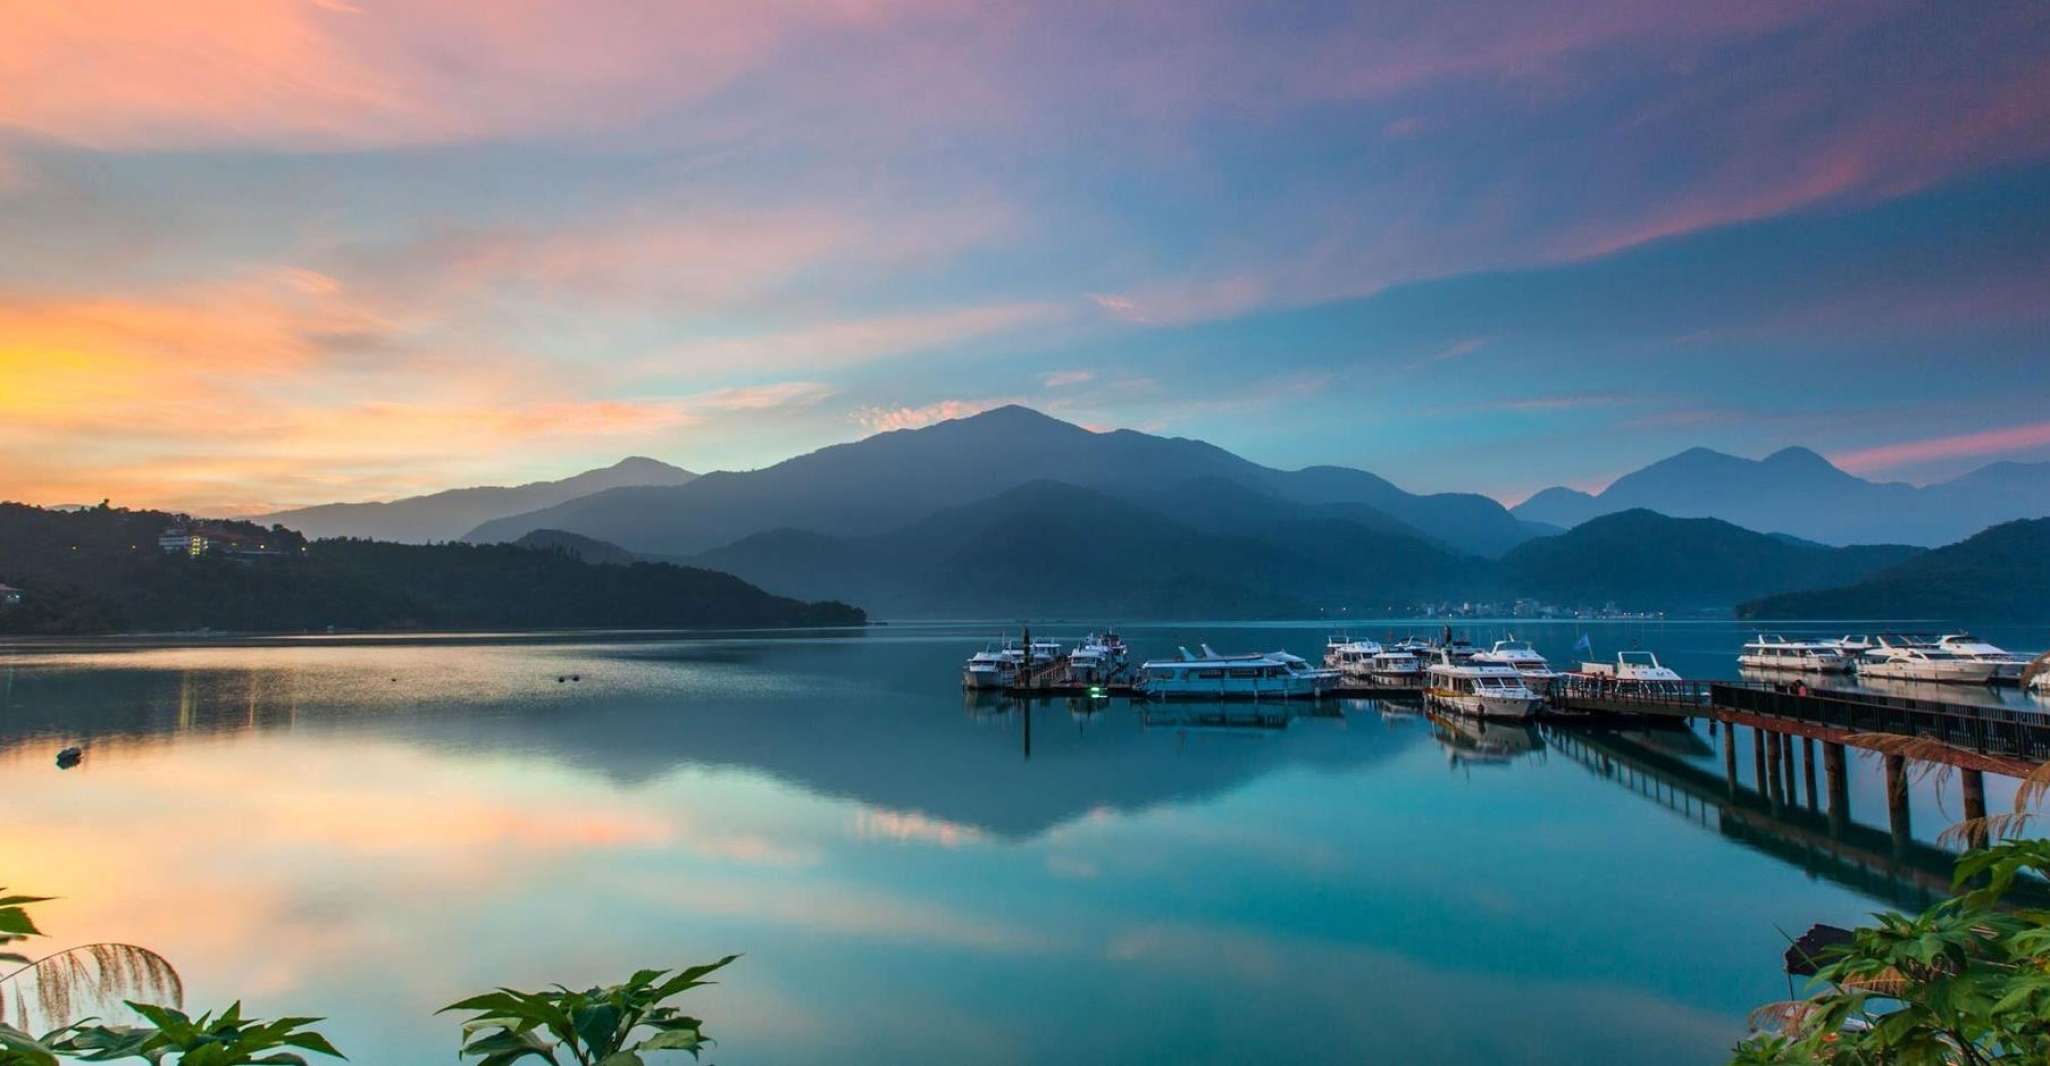 Sun Moon Lake & Qingjing Shared Day Tour from Taichung - Housity